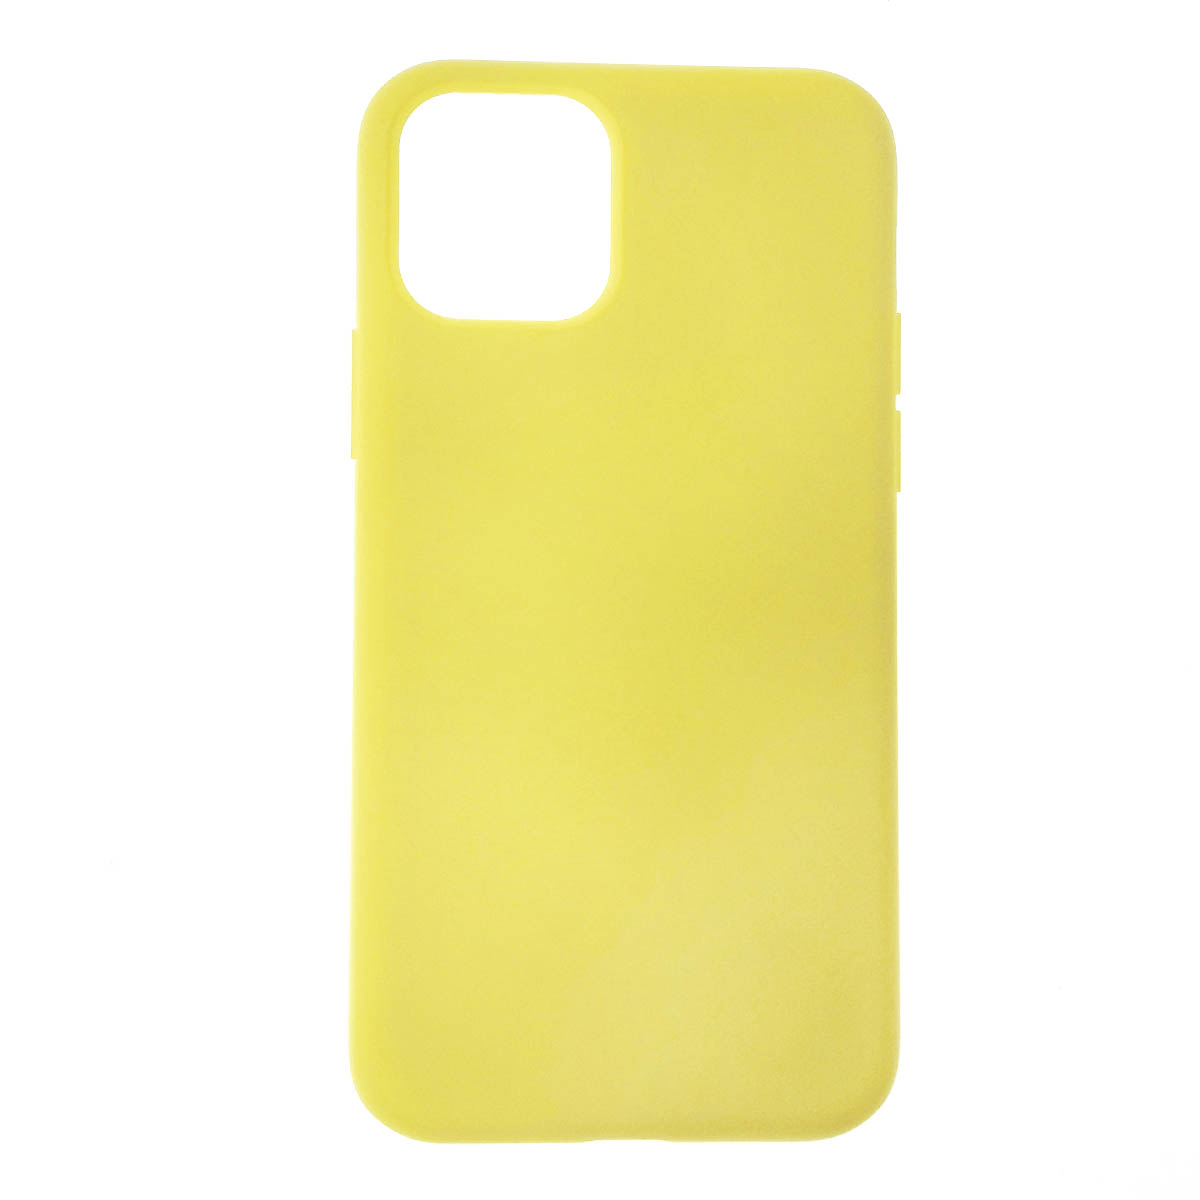 Чехол накладка Silicon Case для APPLE iPhone 11 Pro 2019, силикон, бархат, цвет желтый